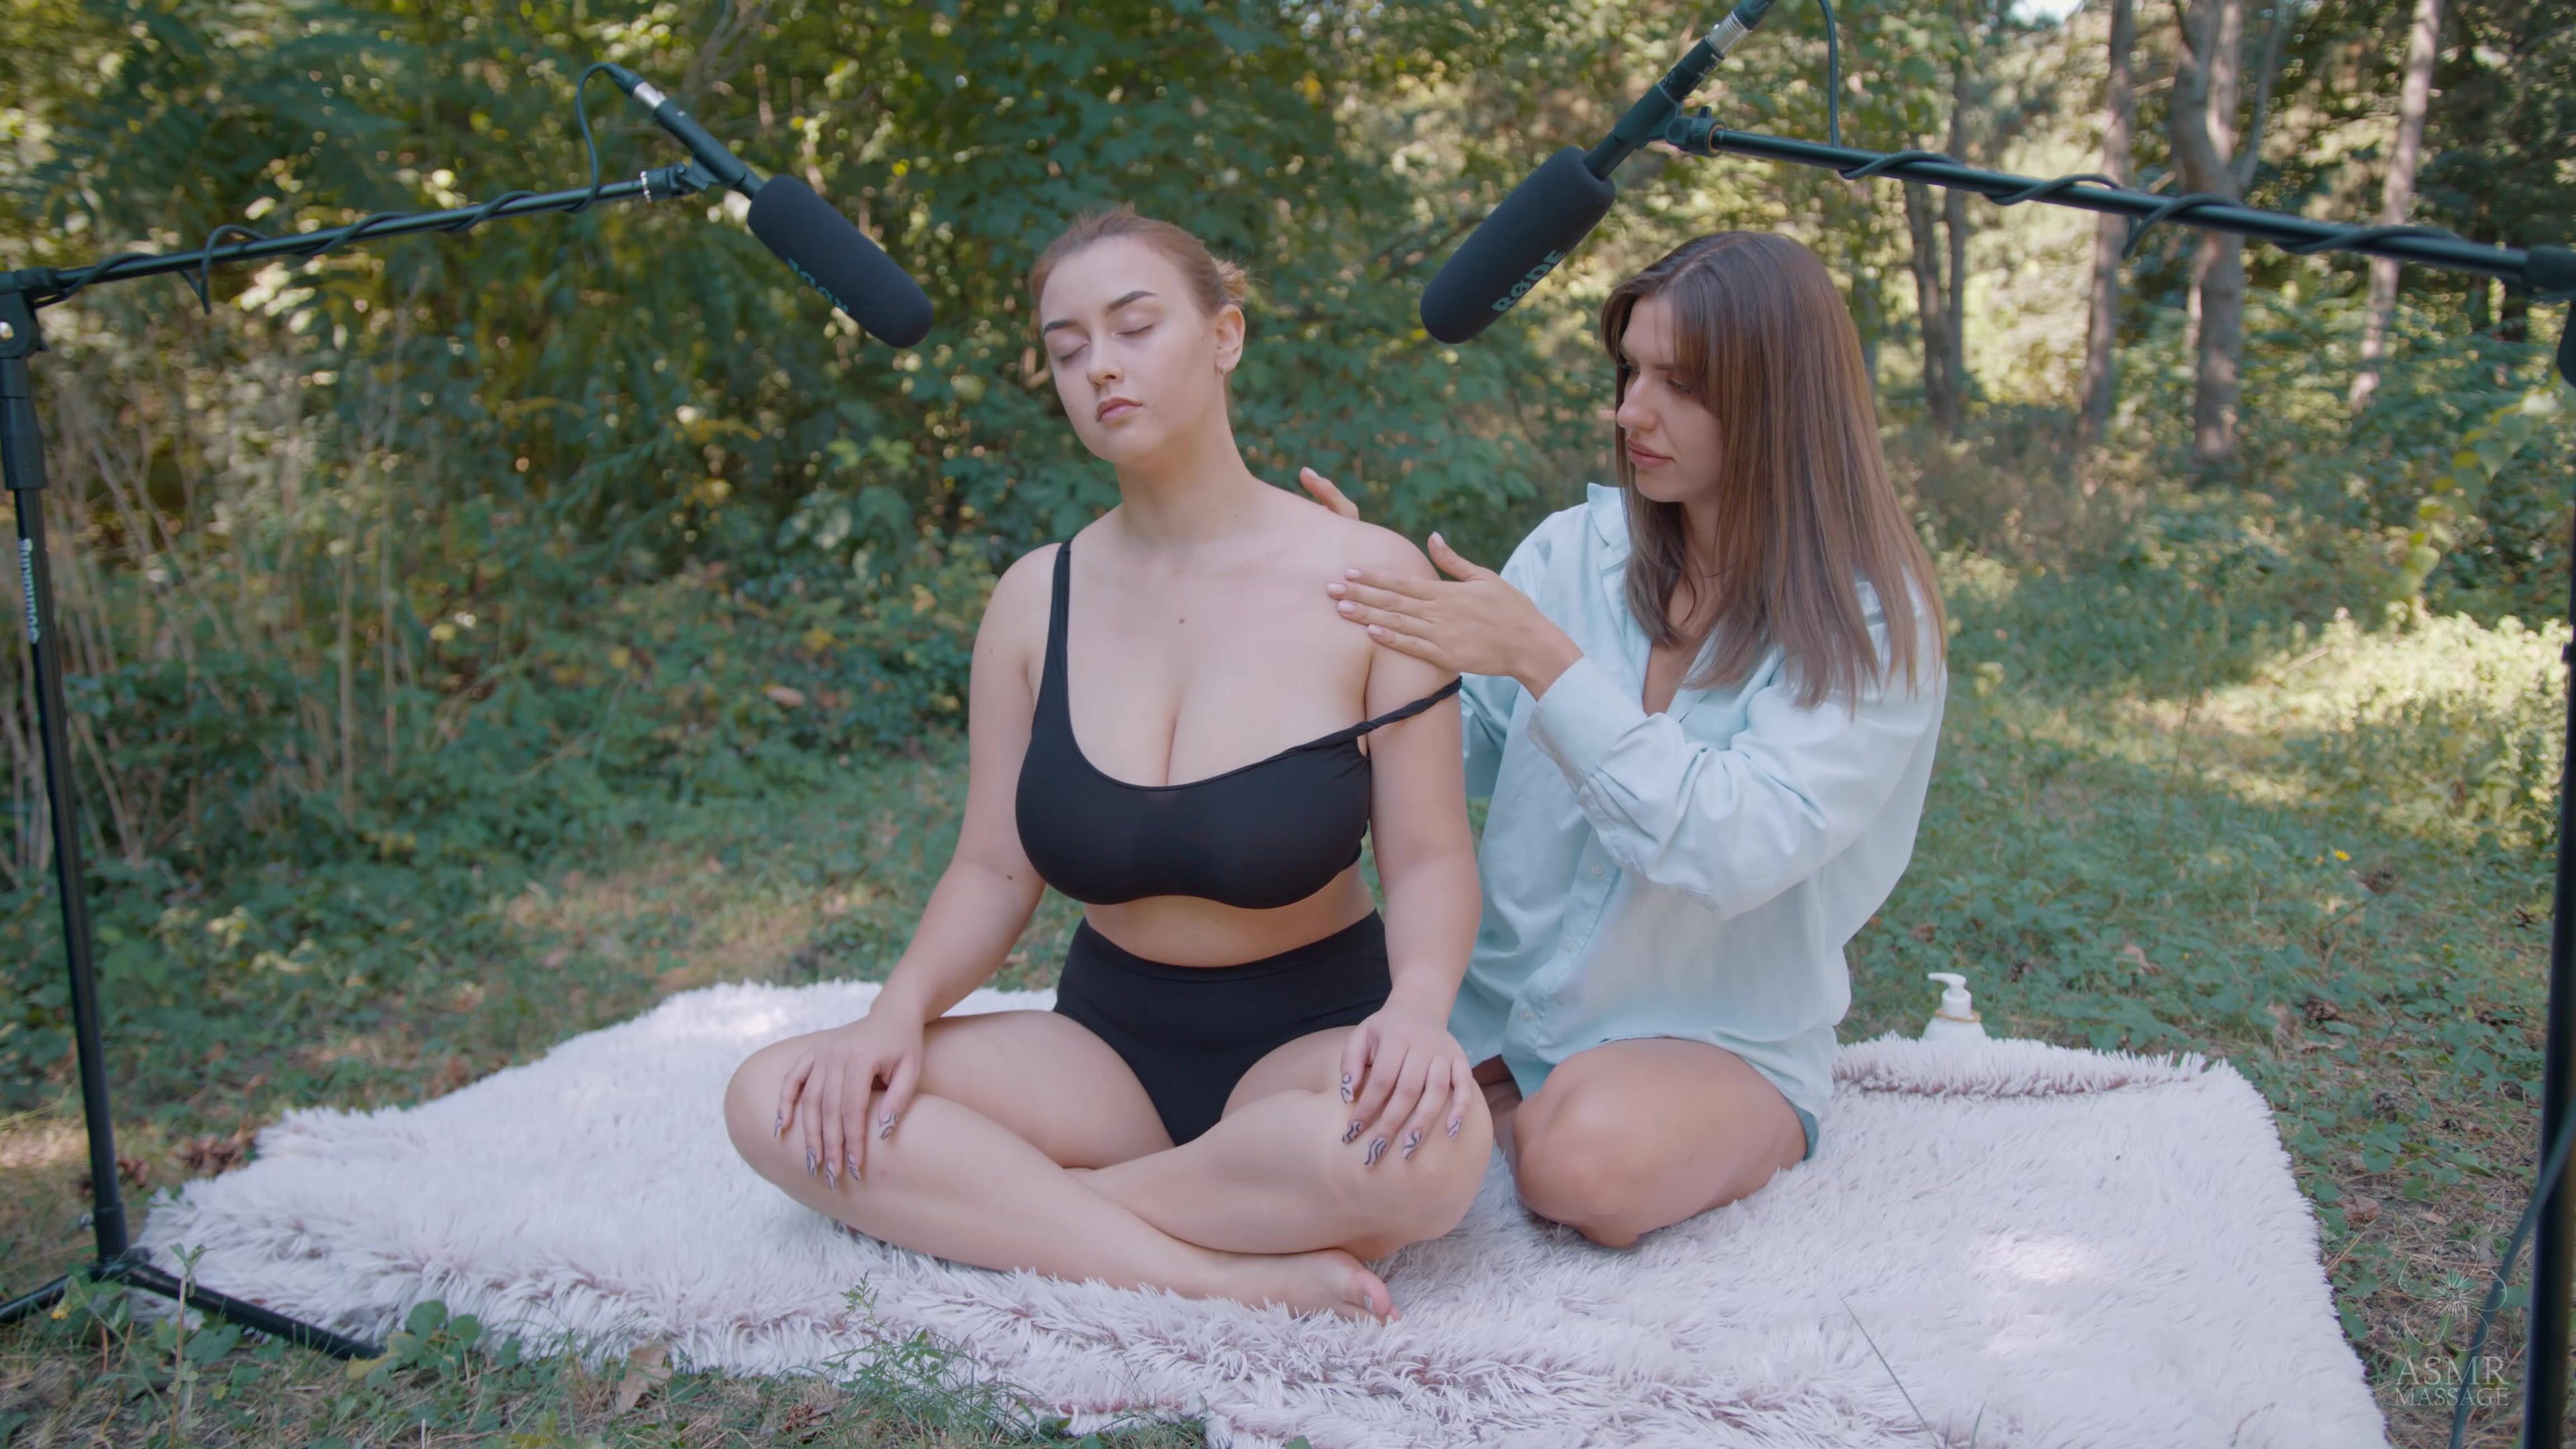 Shoulders Massage on Nature by Olga